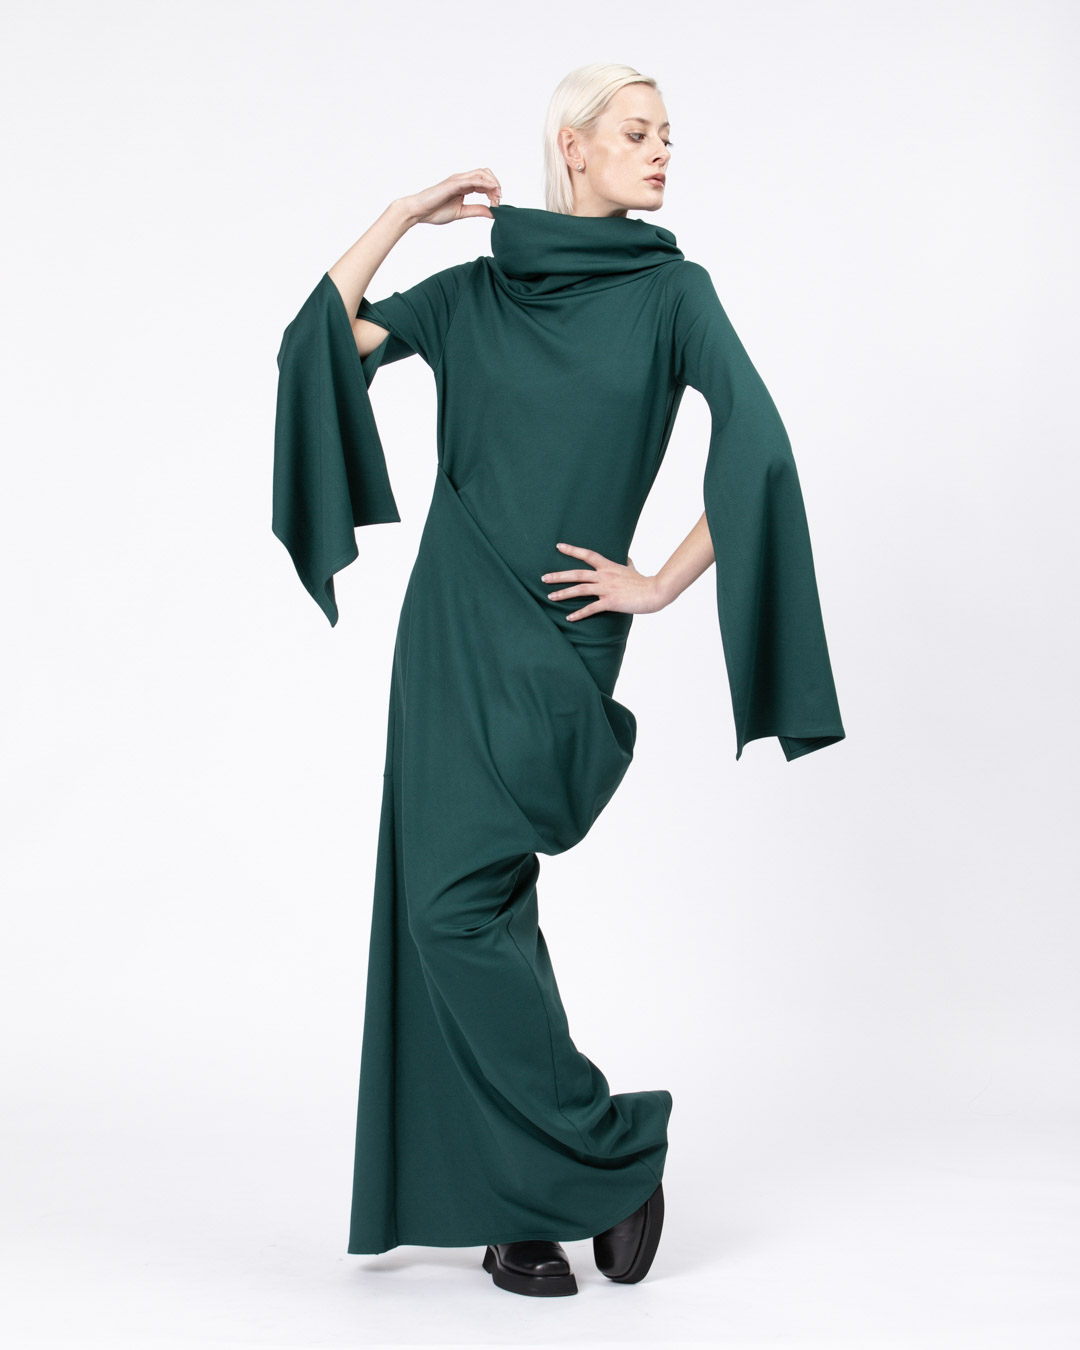 zielona sukienka PUDO Joanna Weyna buty APIA Officine Creative